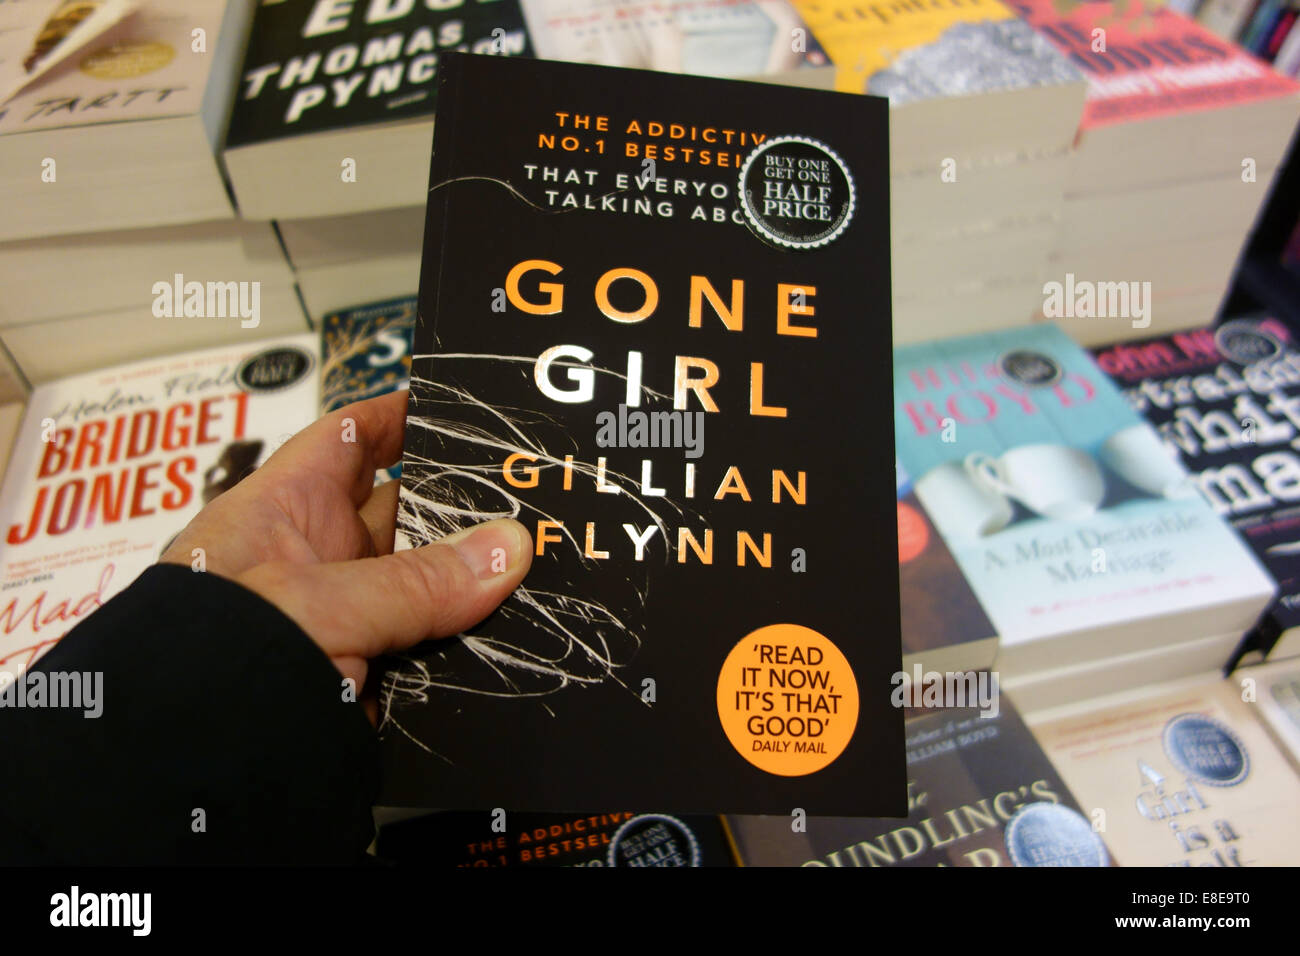 'Gone Girl' bestselling thriller by Gillian Flynn in a bookshop, London Stock Photo